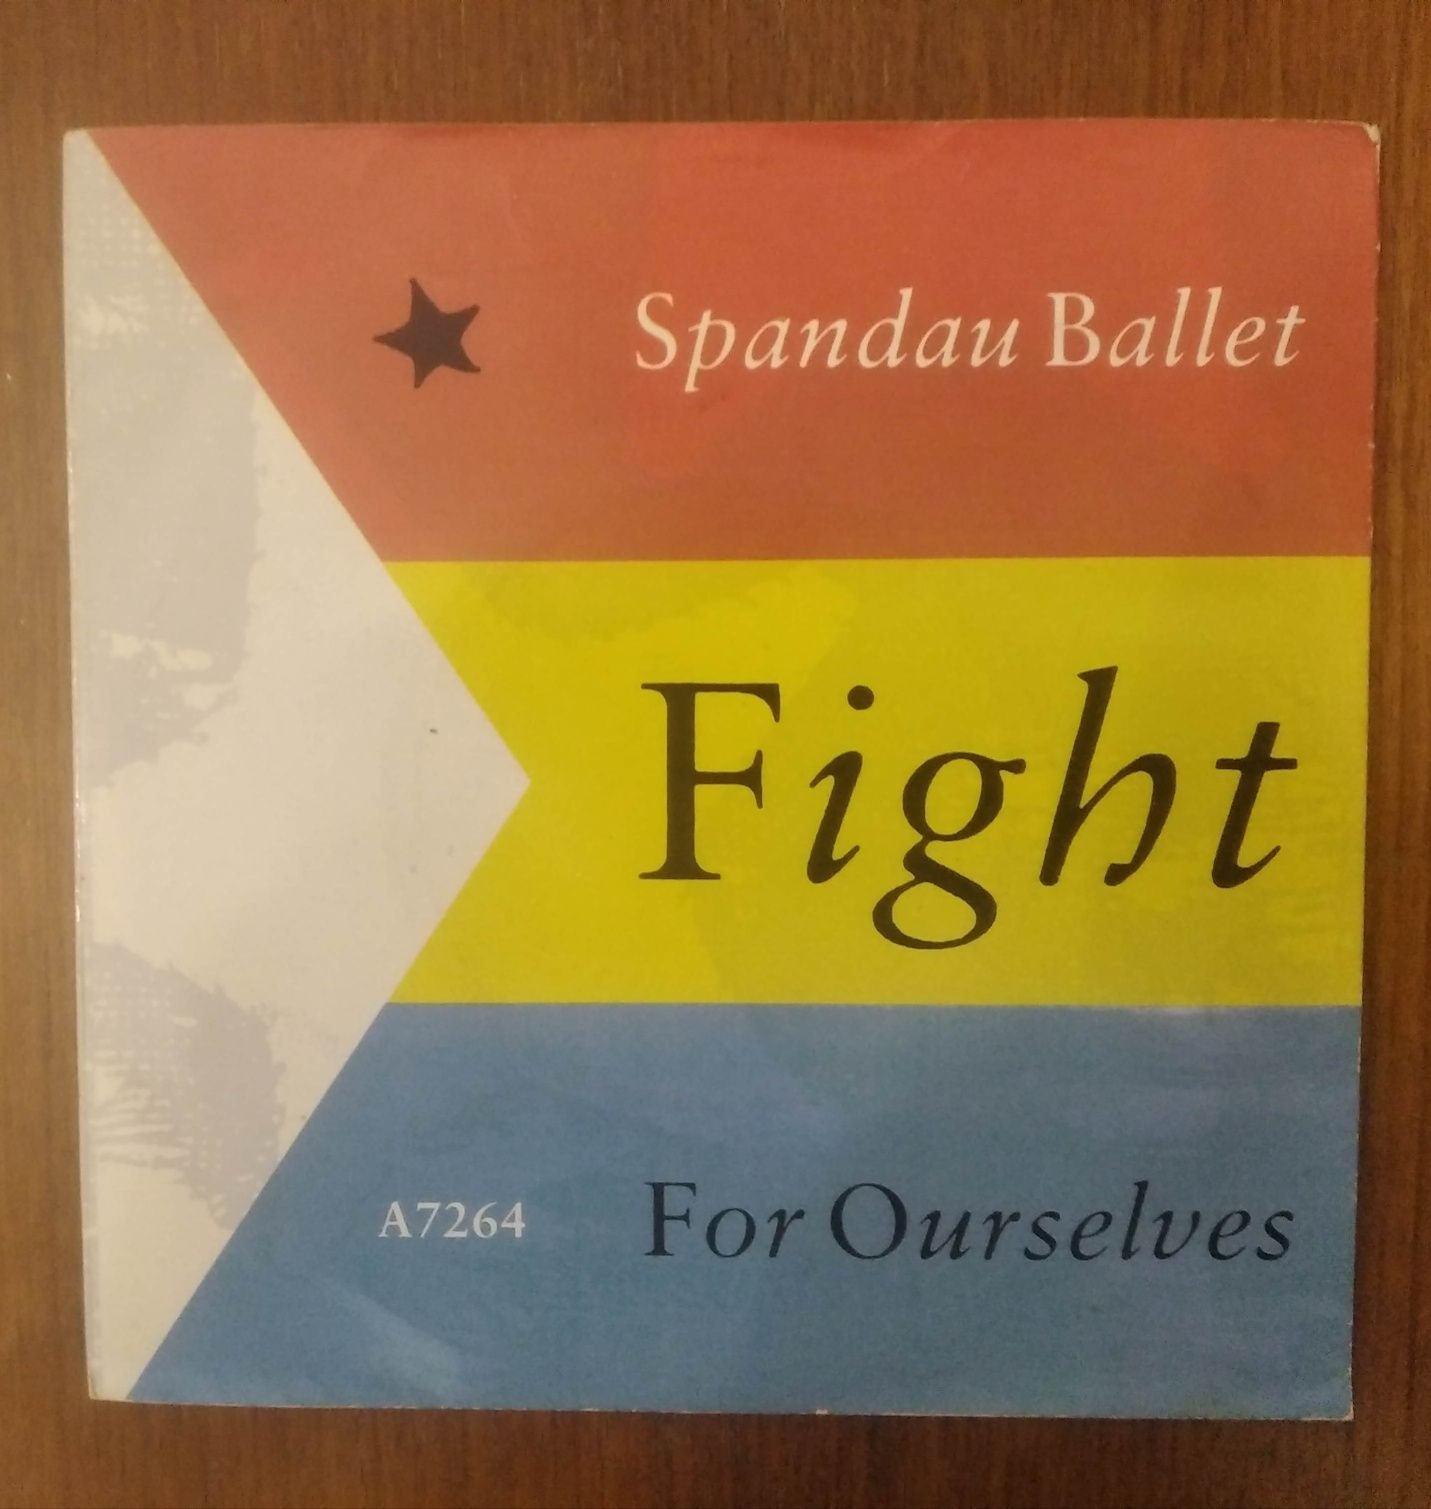 Spandau Ballet single em vinil "Fight For Ourselves"